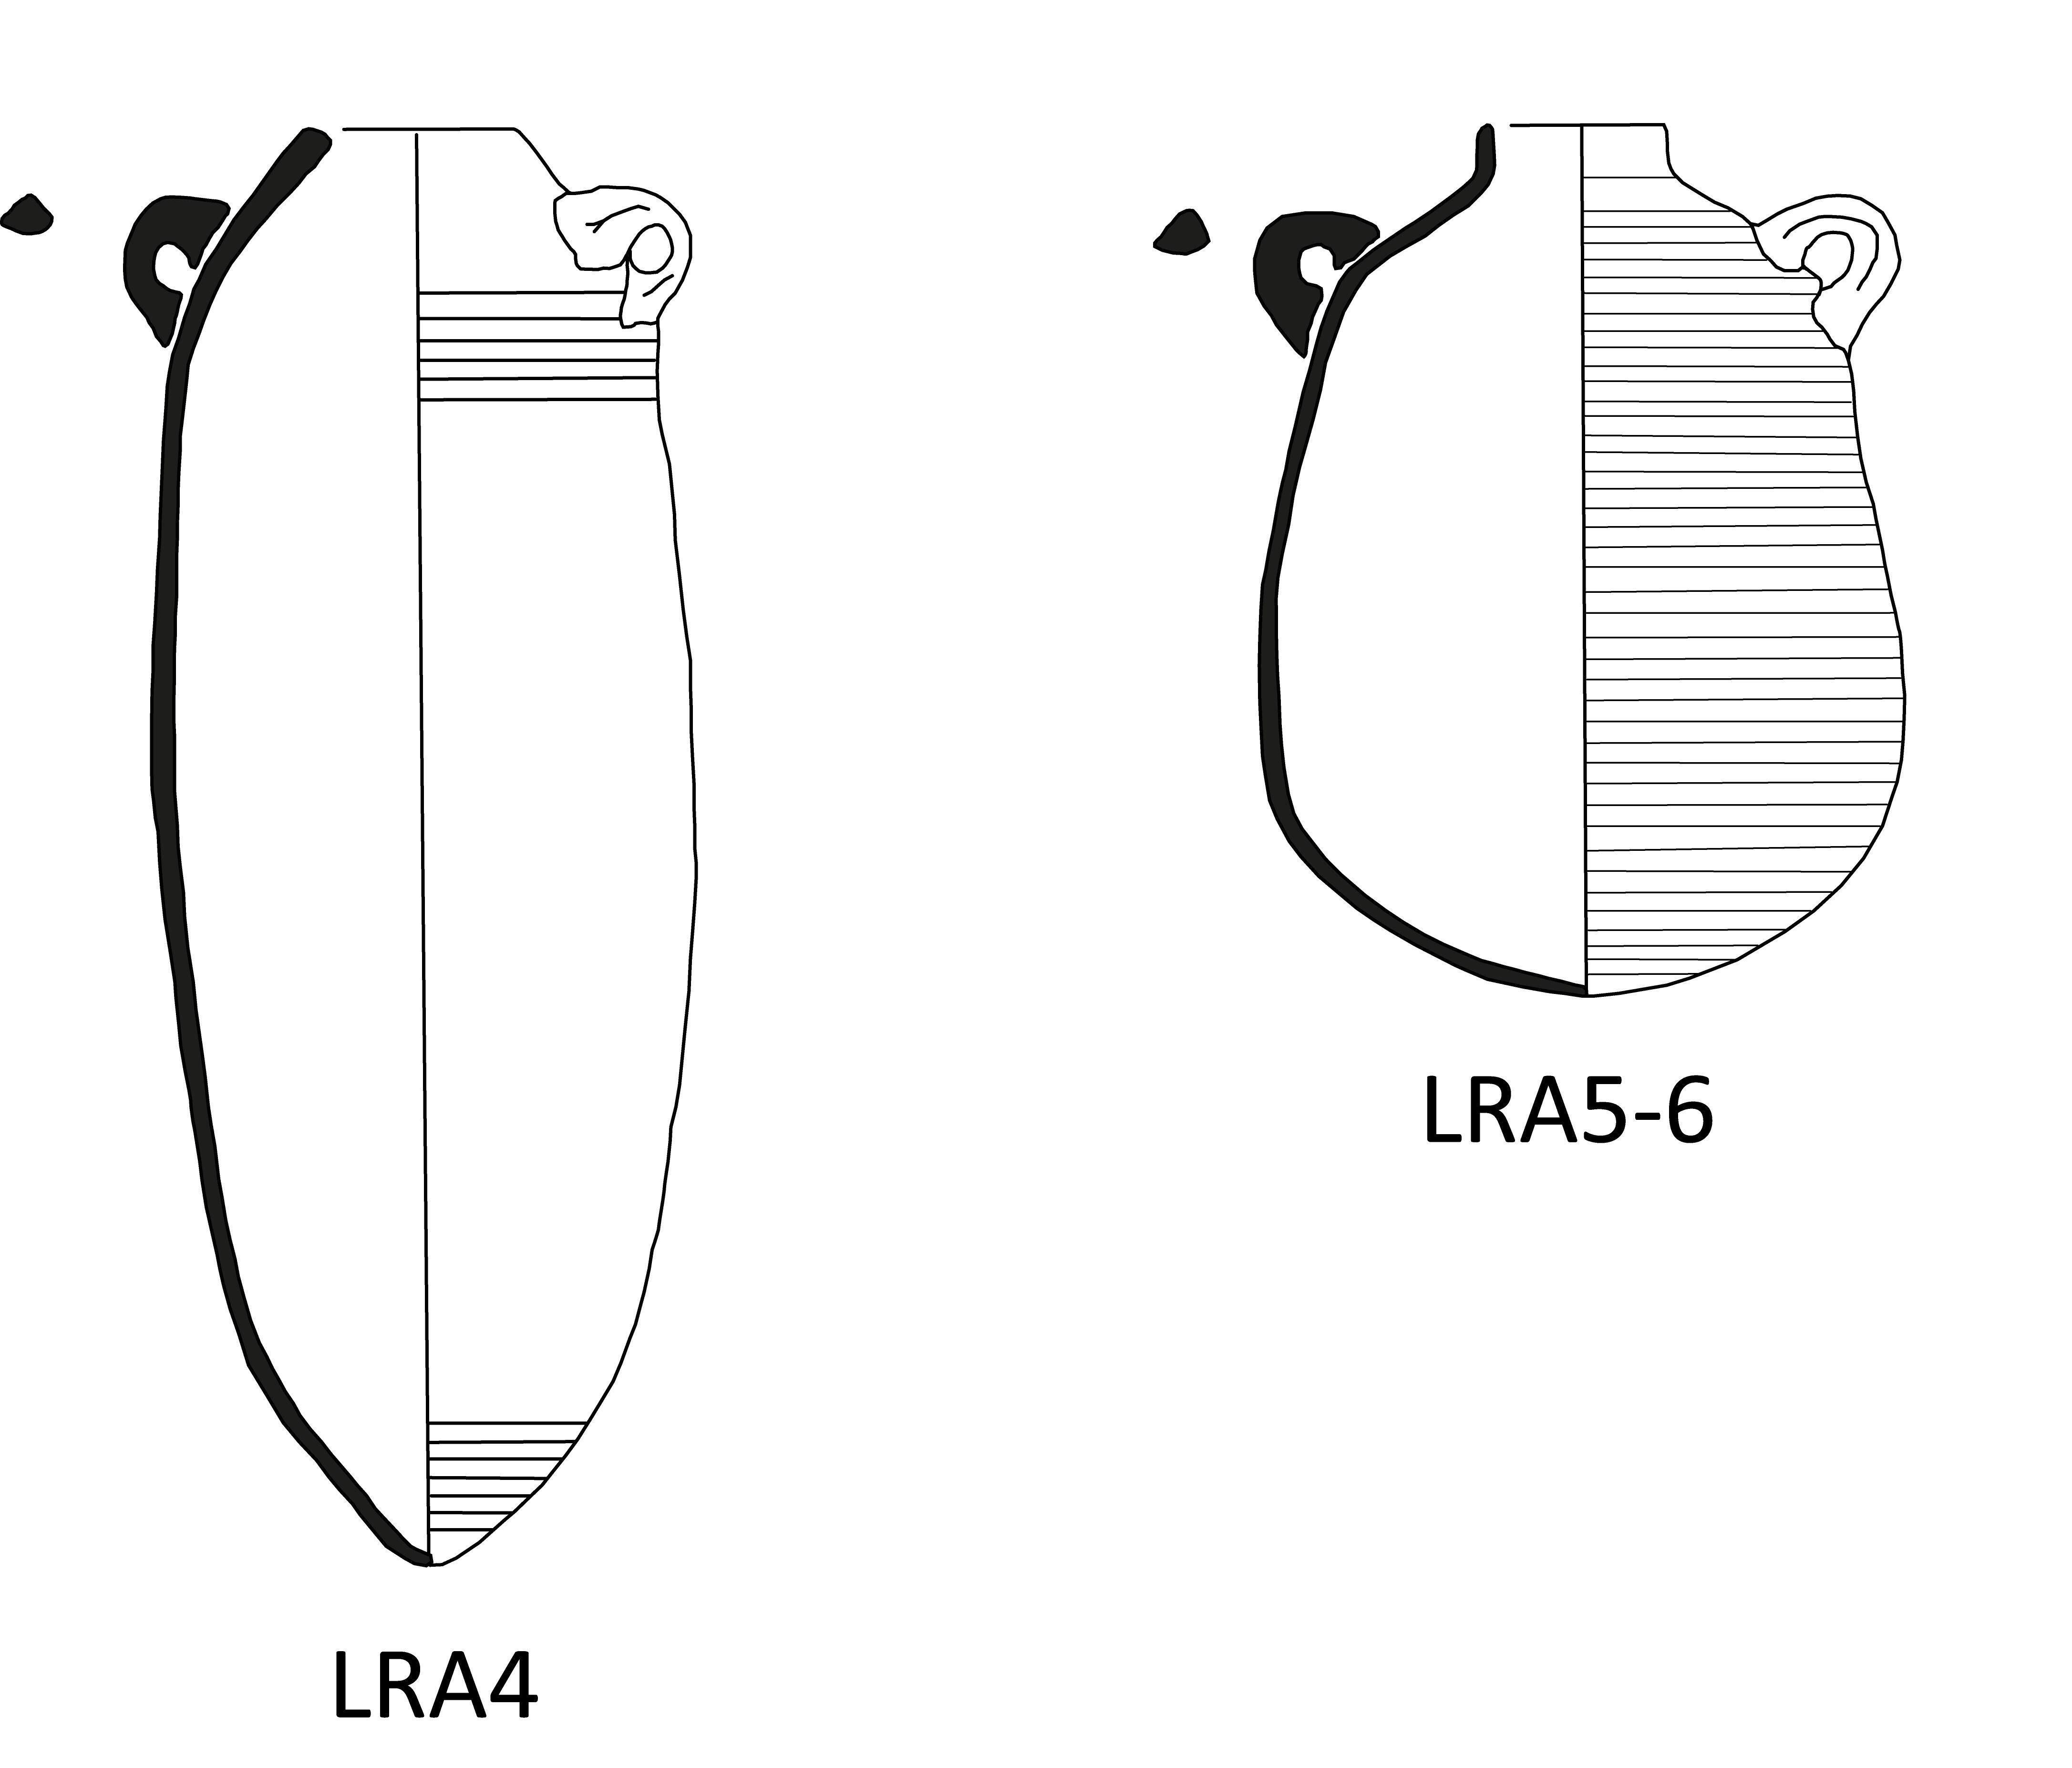 Fig 2 amphora drawings